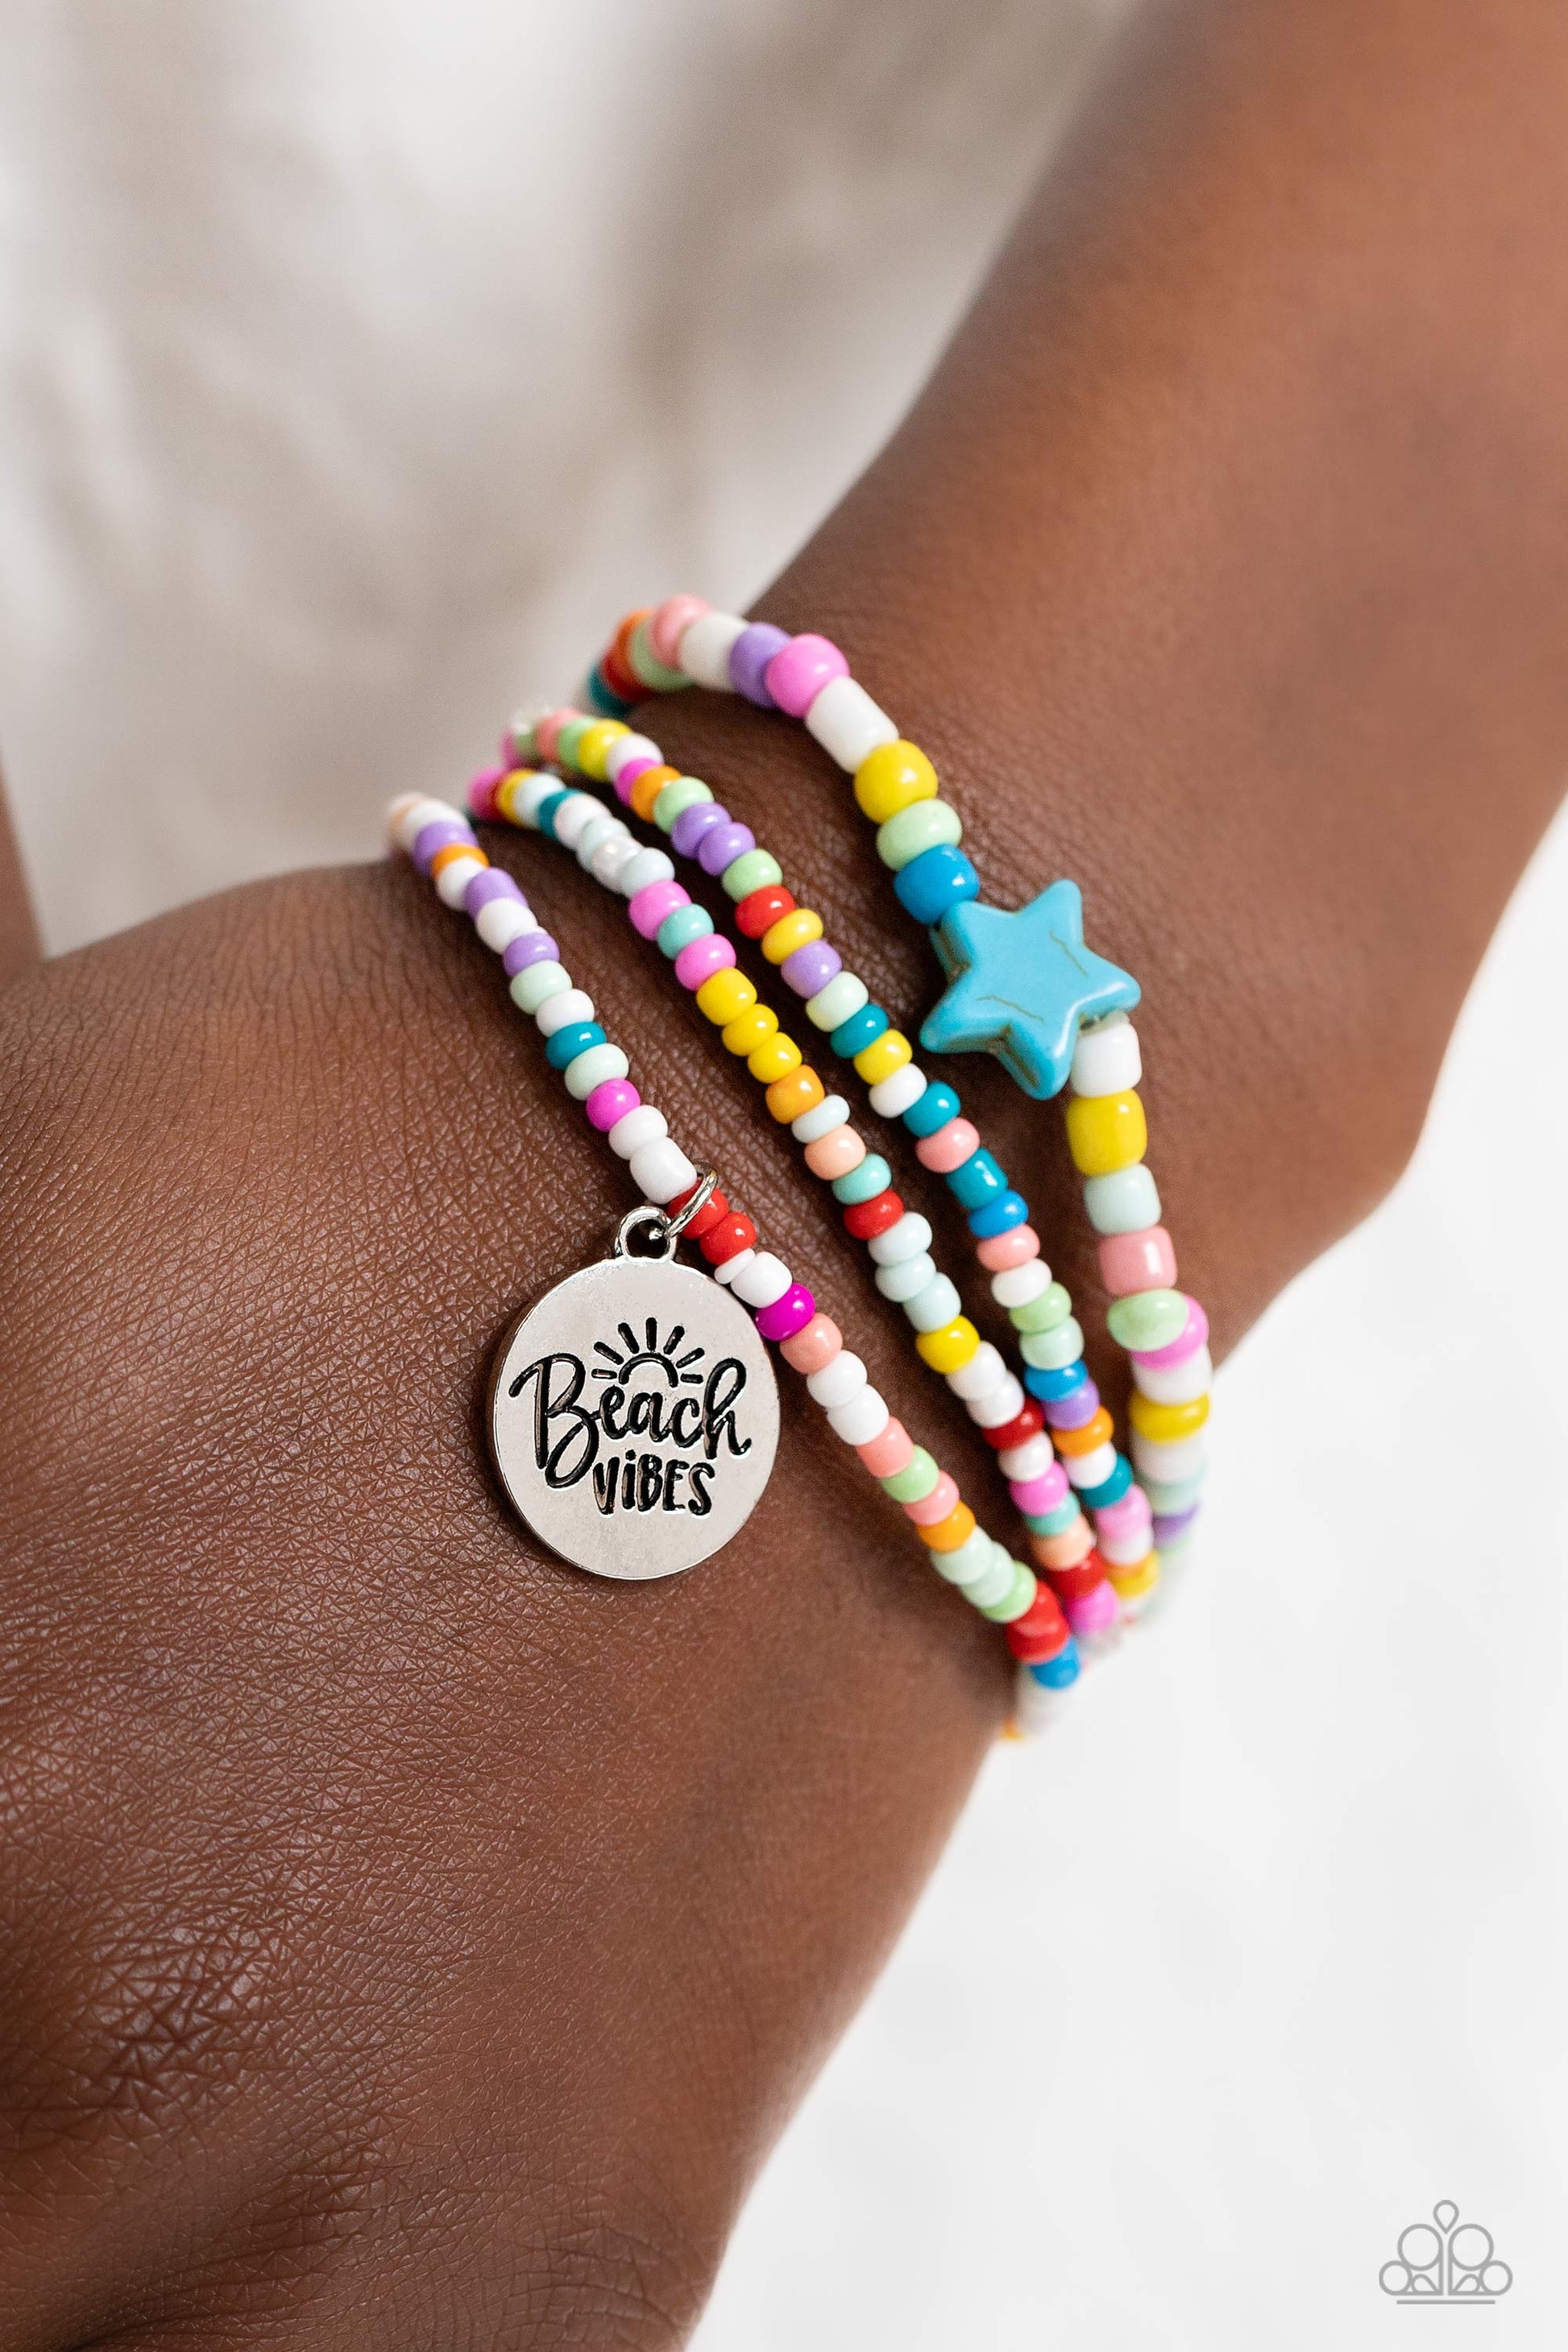 Colorful Bracelet Accessories, Colorful Beads Bracelets